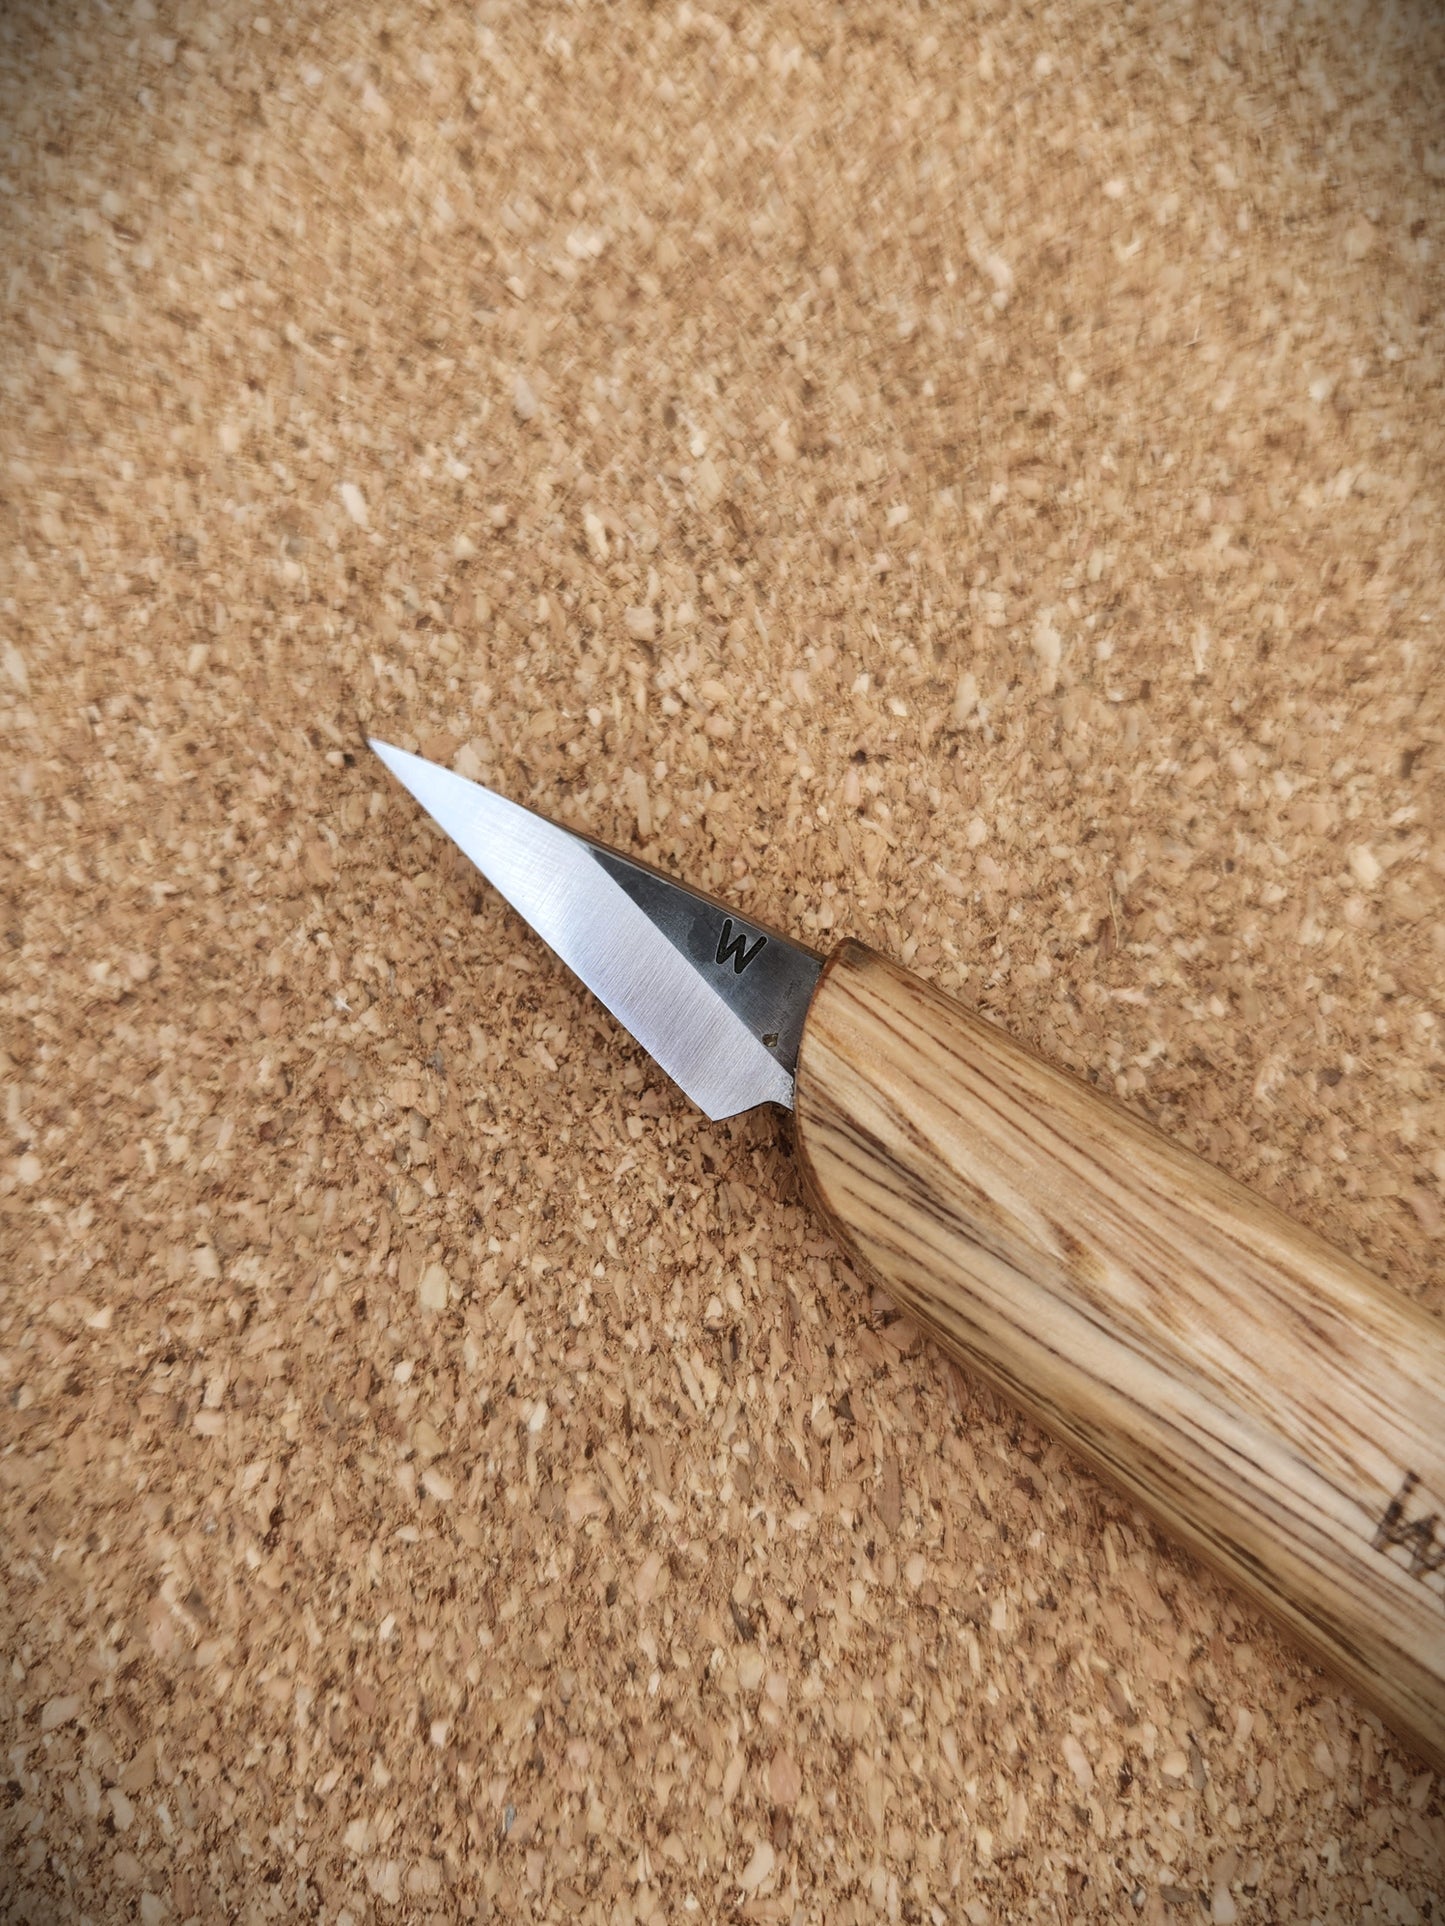 Woodlands cc "Artisan" Detailing Knife